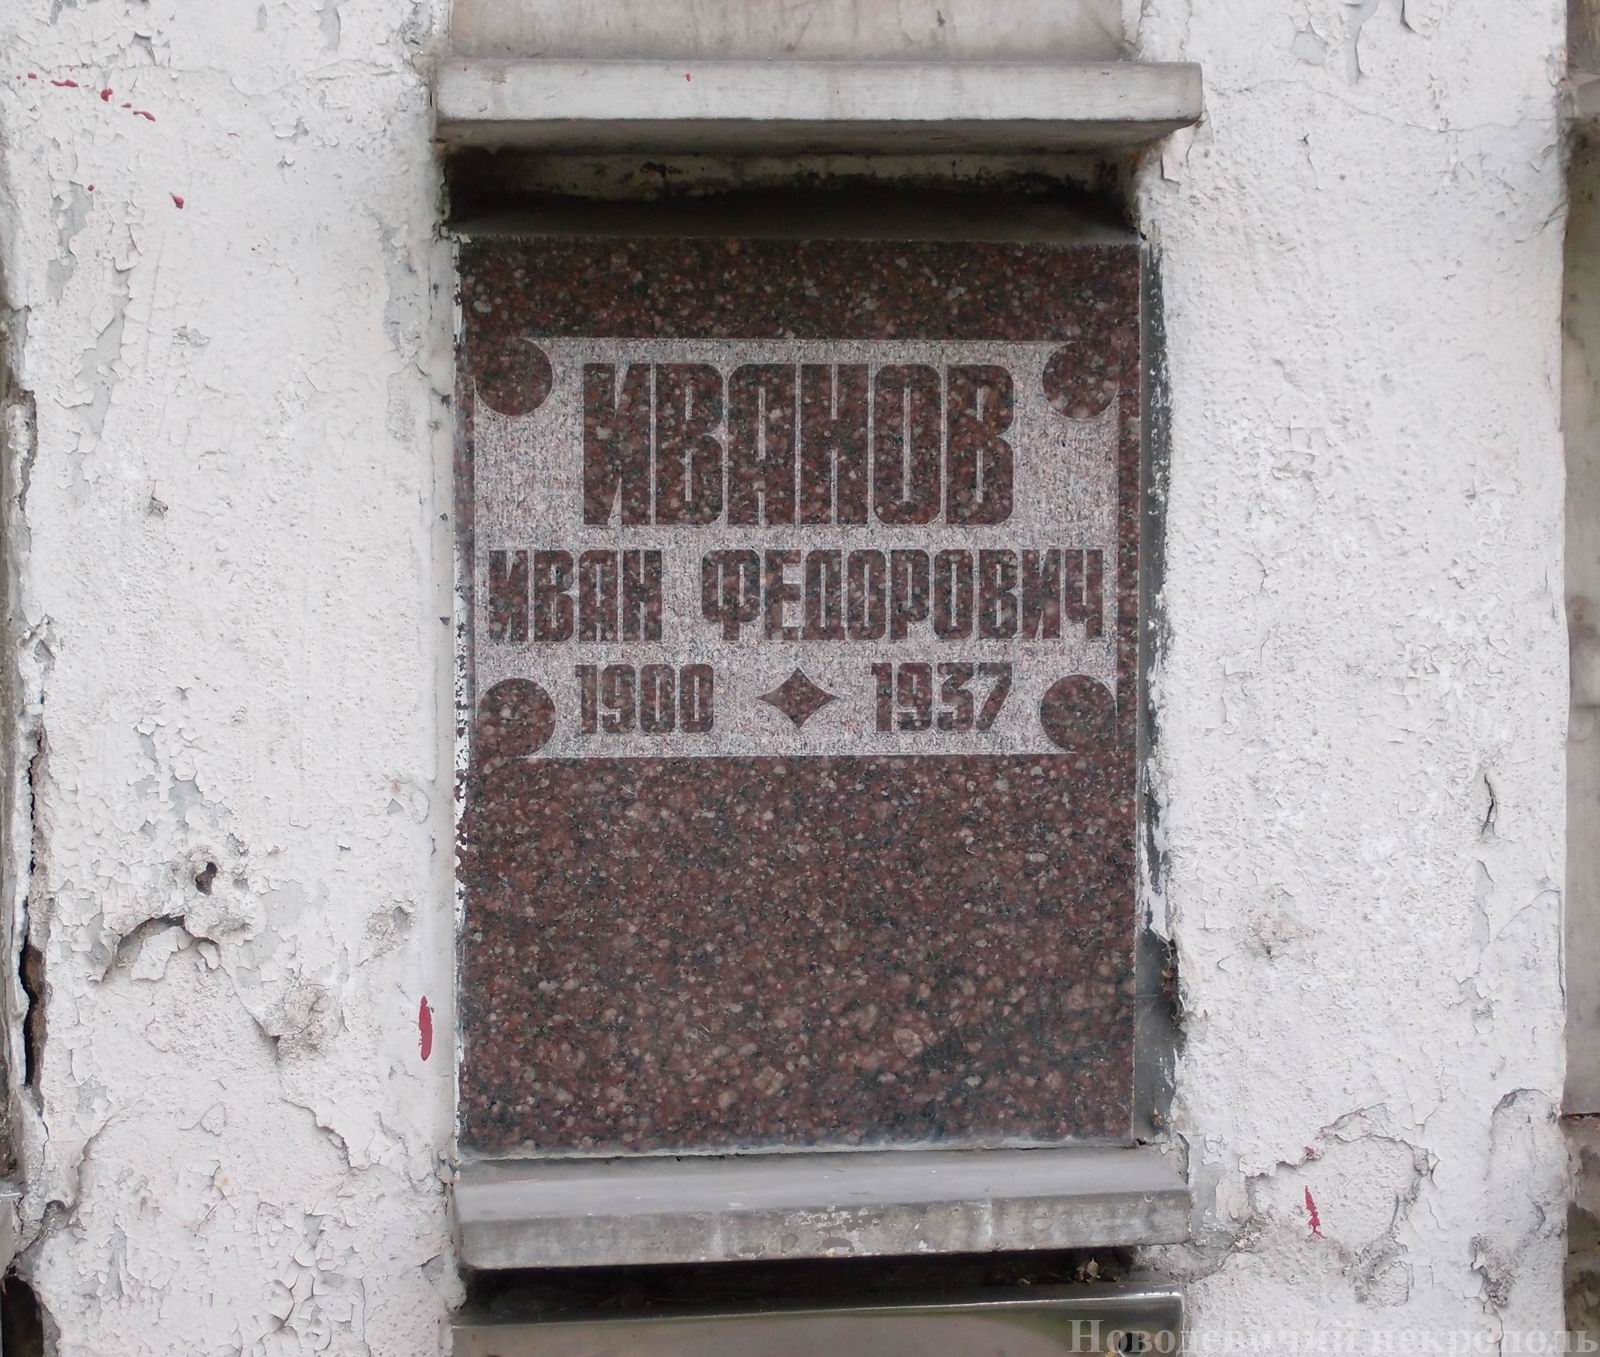 Плита на нише Иванова И.Ф. (1900-1937), на Новодевичьем кладбище (колумбарий [29]-2-3).